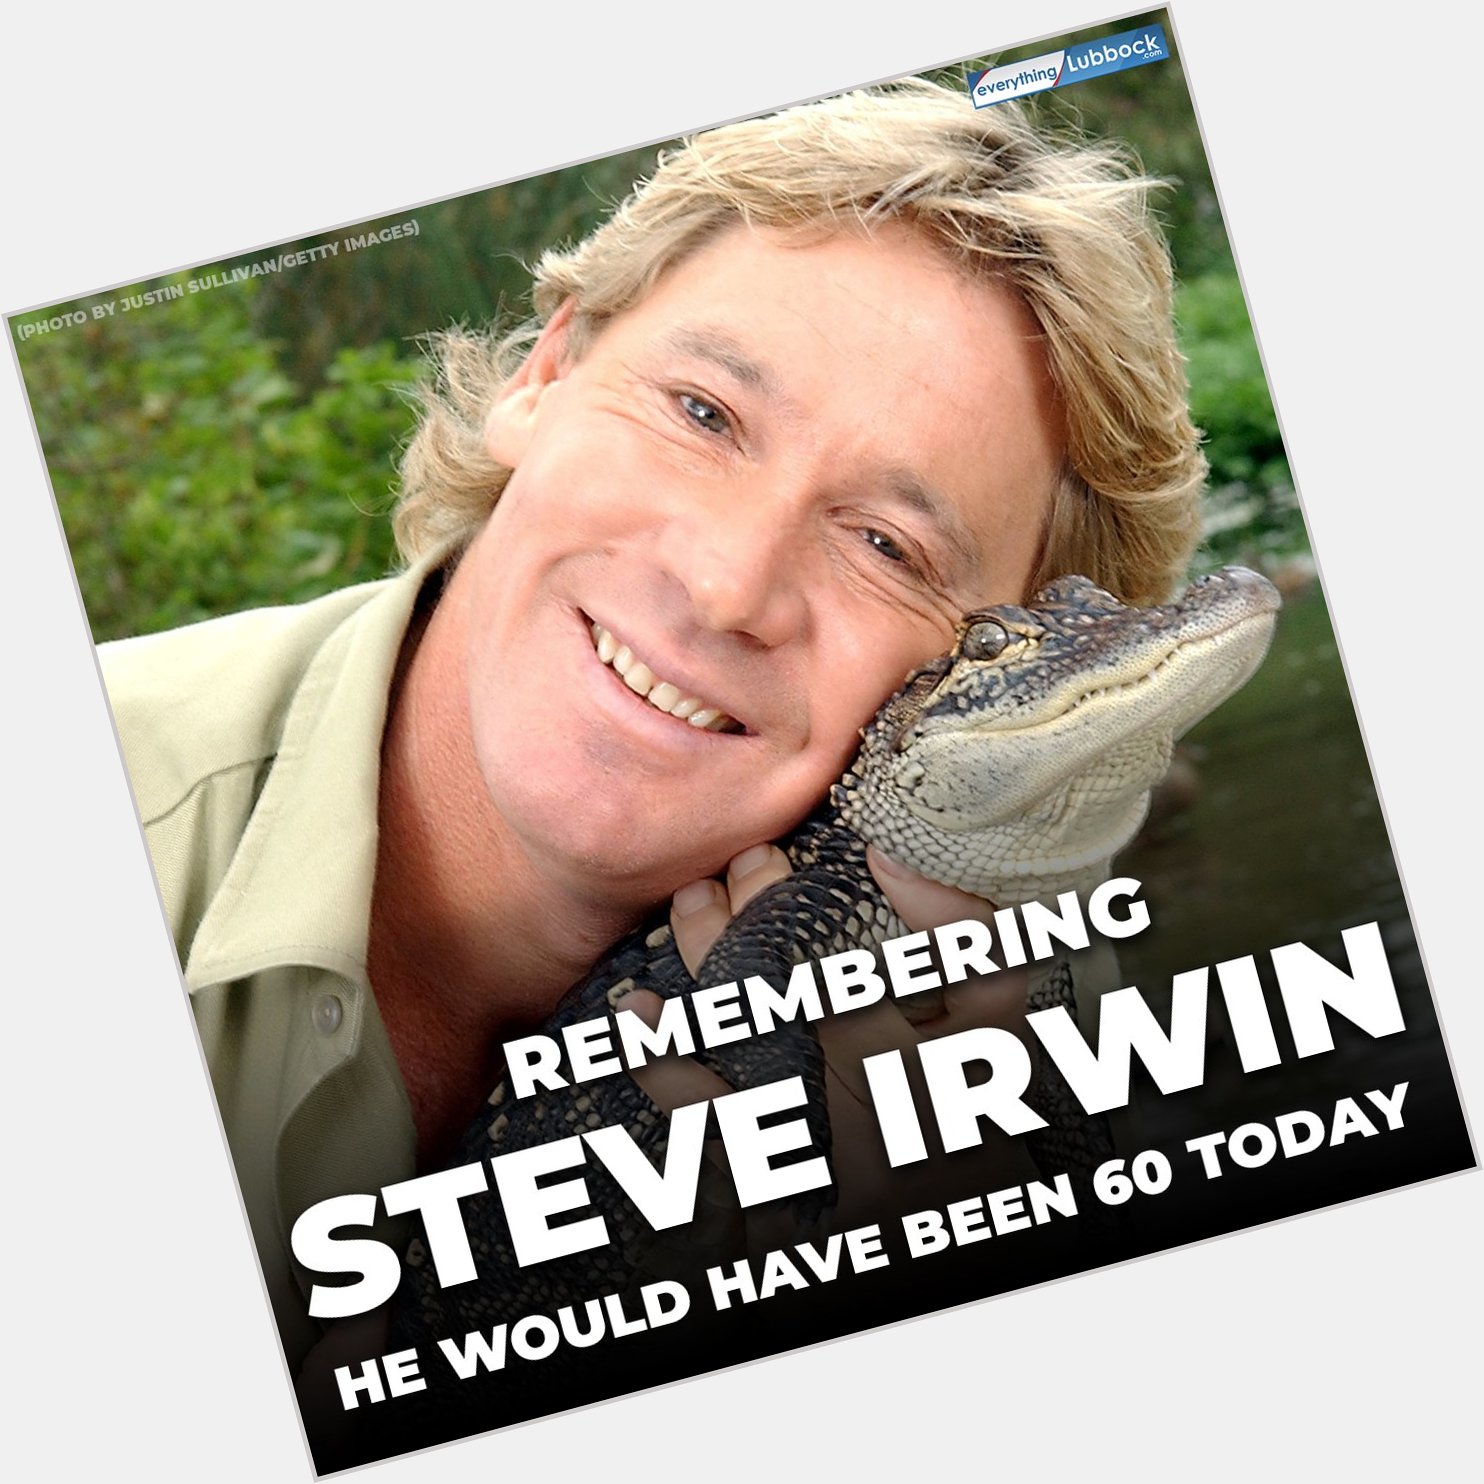 Happy birthday to Steve Irwin.  